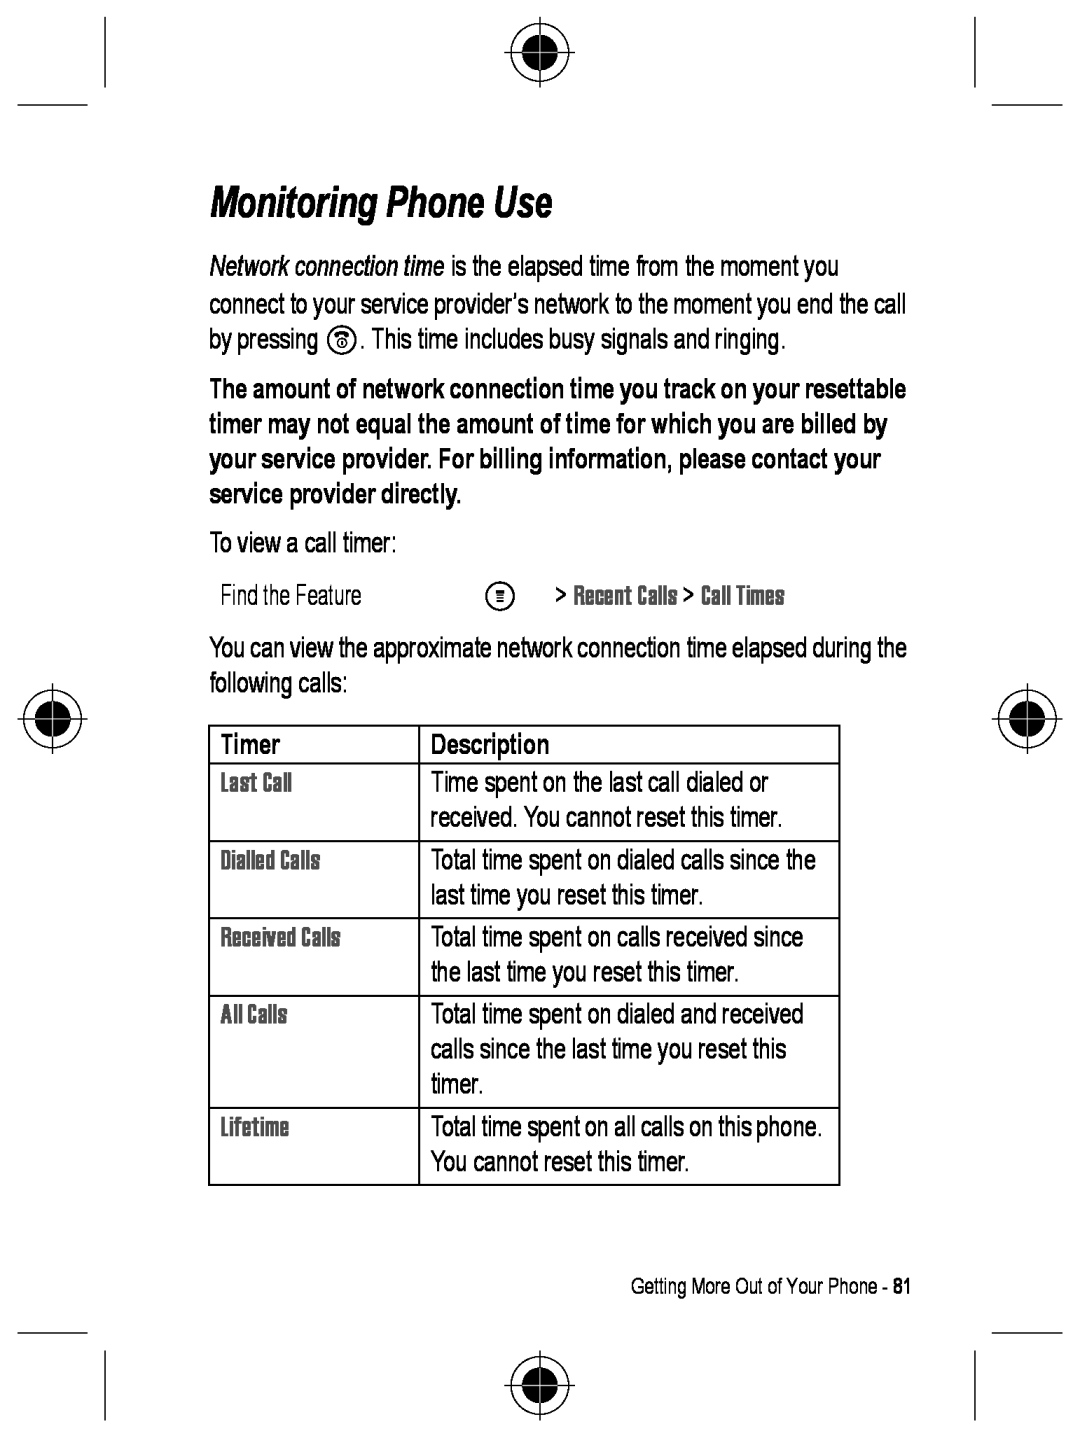 Motorola C330 manual Monitoring Phone Use, M Recent Calls Call Times, Last Call, Dialled Calls, Received Calls, All Calls 